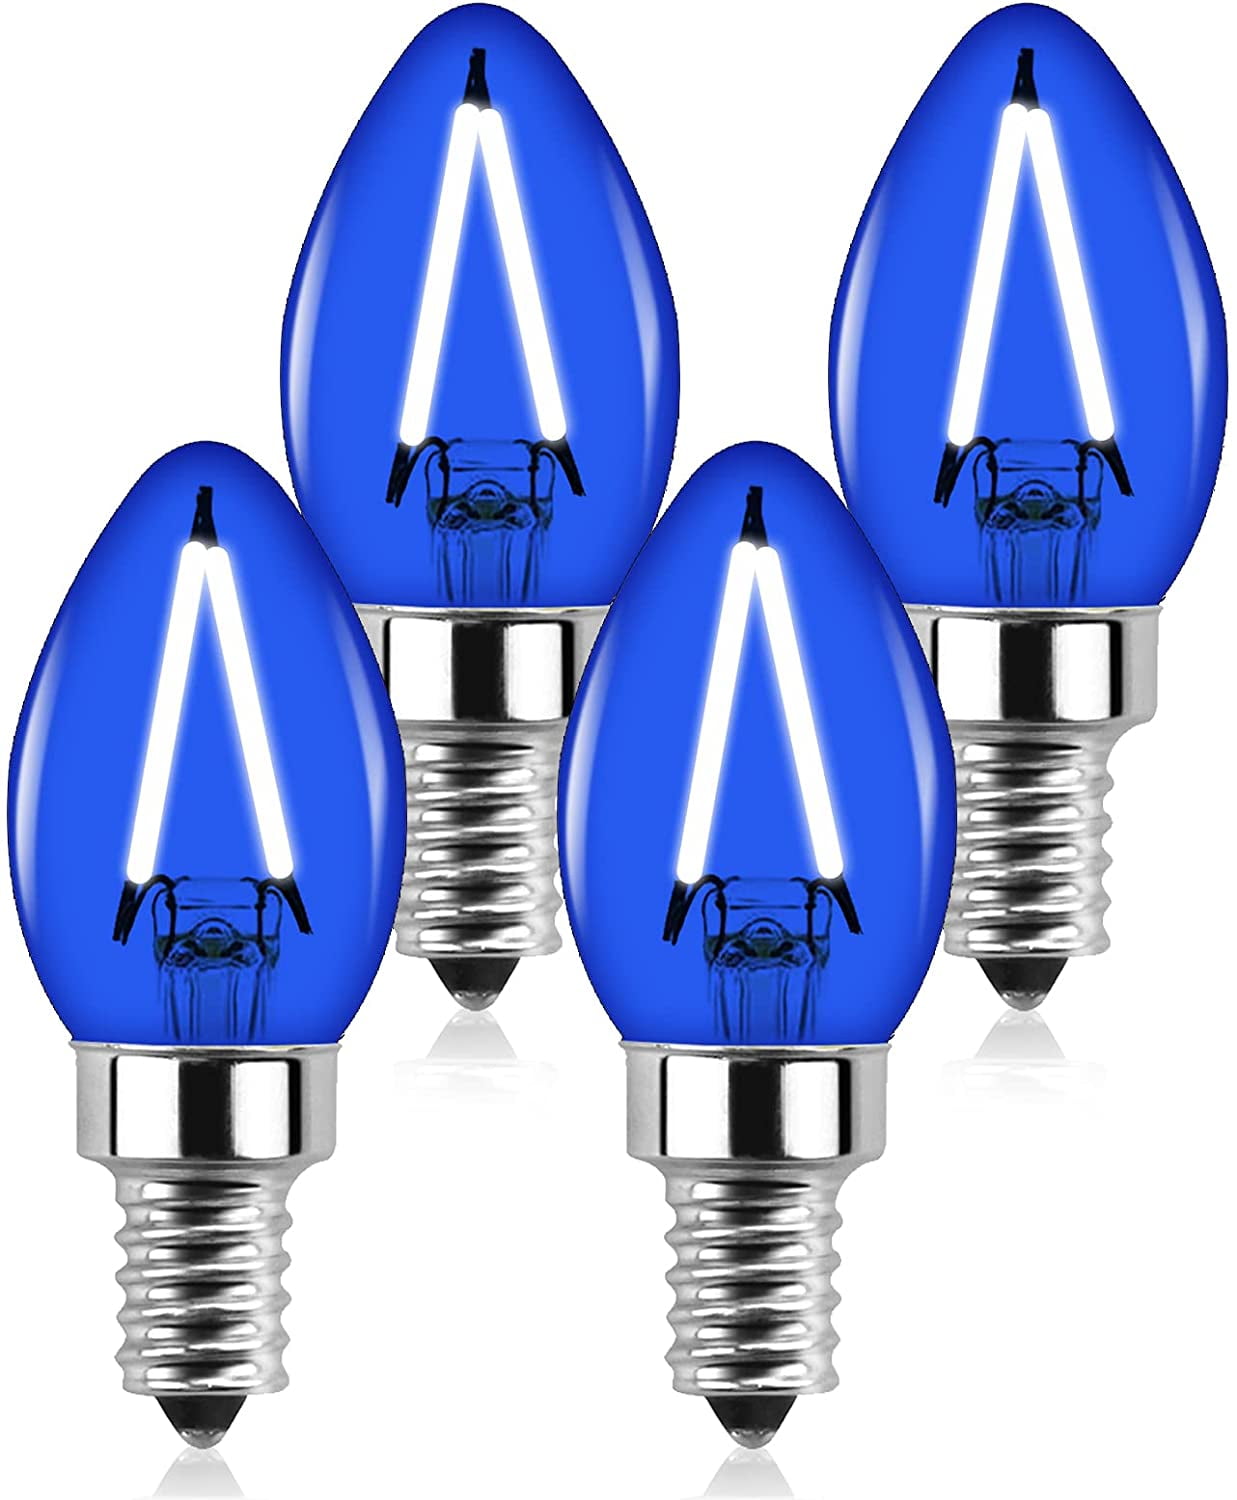 E12 /E14 LED Candelabra Bulb Low Voltage 12 V Lightings Cabins Chandeliers Wall Scones Candle Lamp Light Bulbs 10 Pack 2200K Warm White LED Chandelier Light Bulbs 